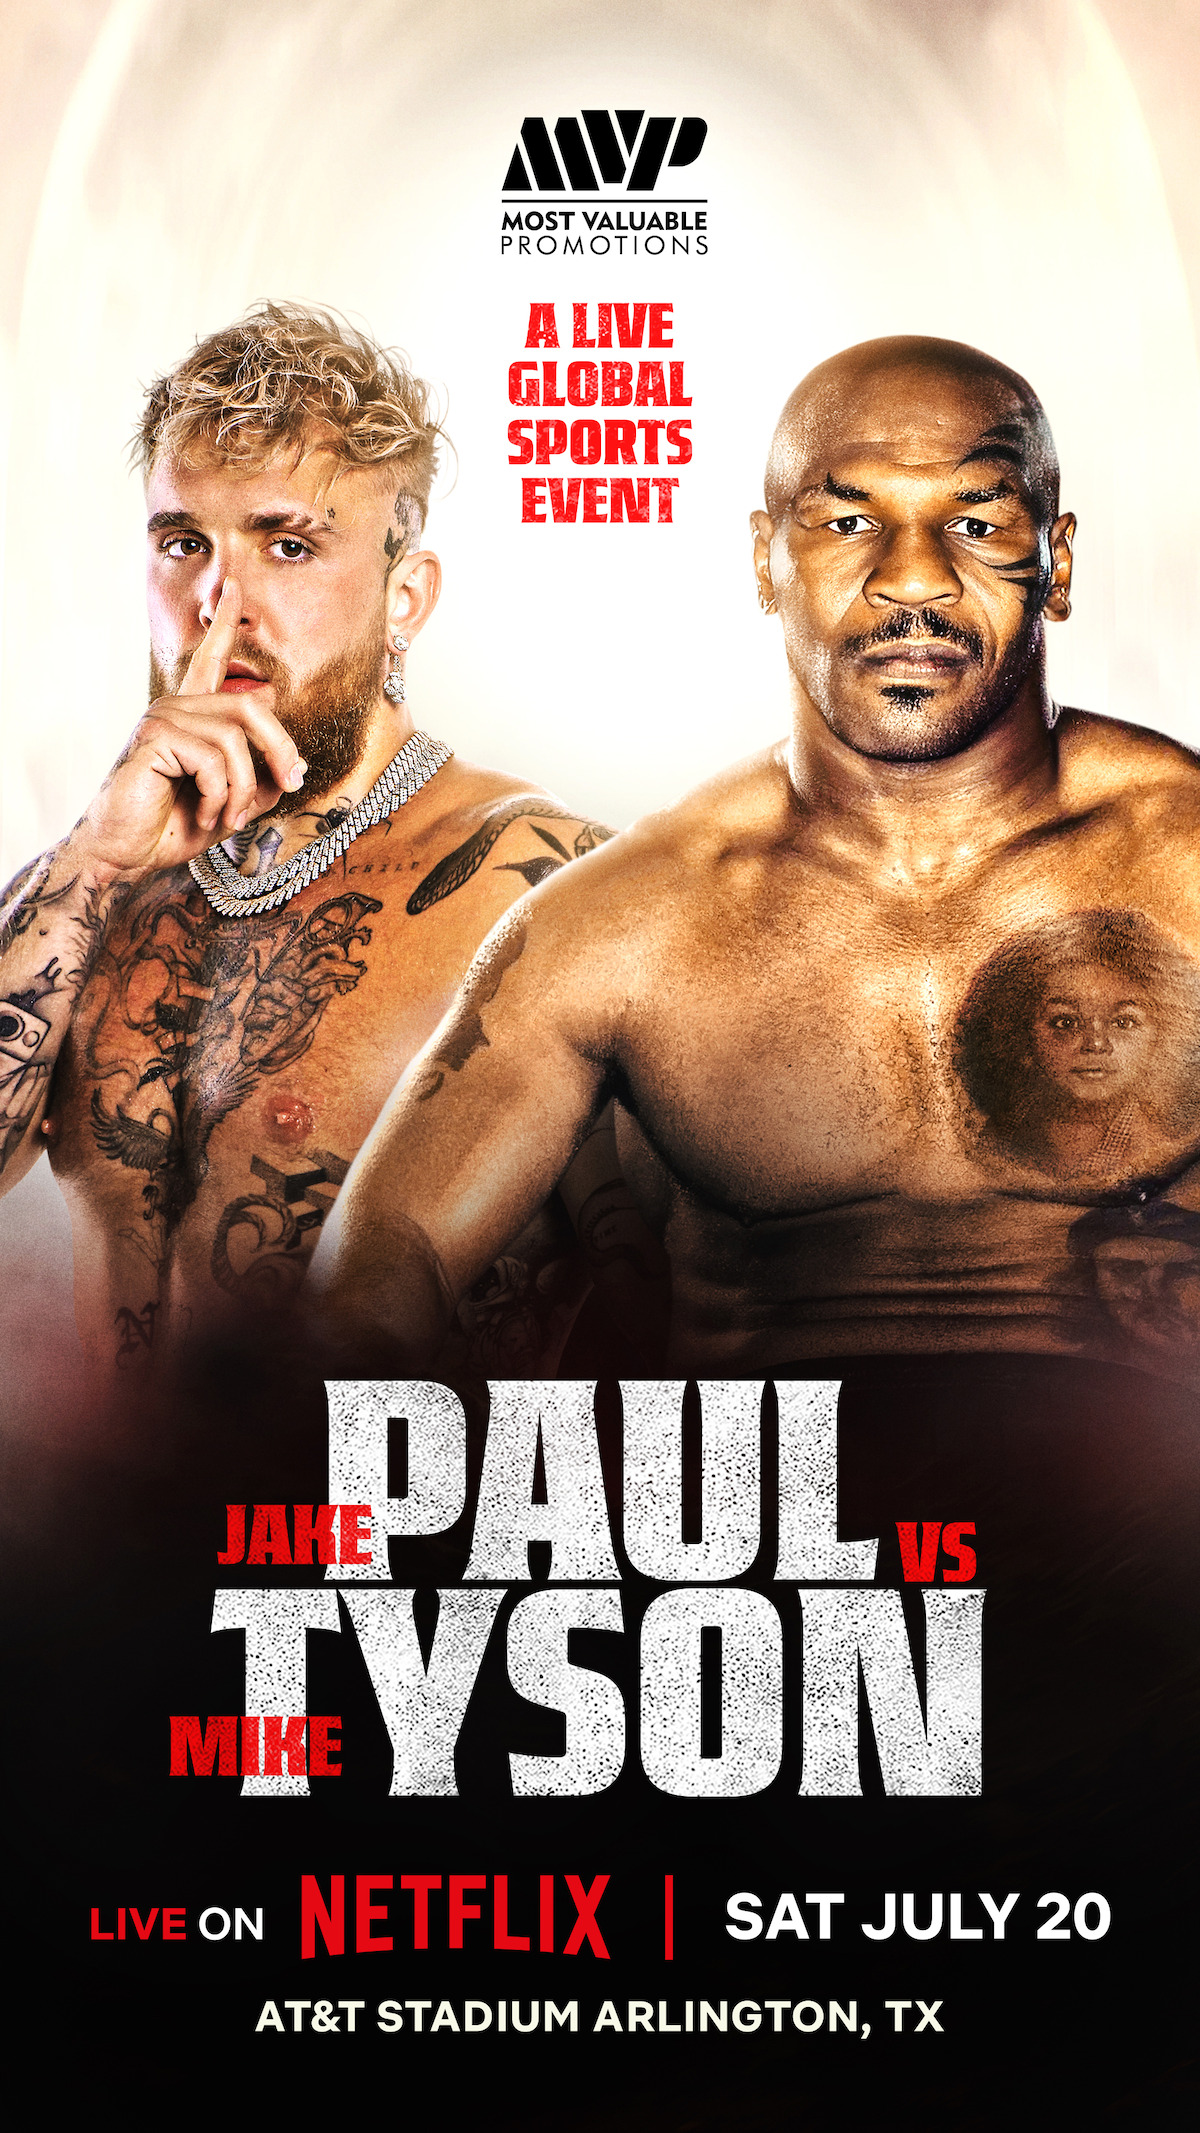 Jake Paul vs. Mike Tyson live on Netflix